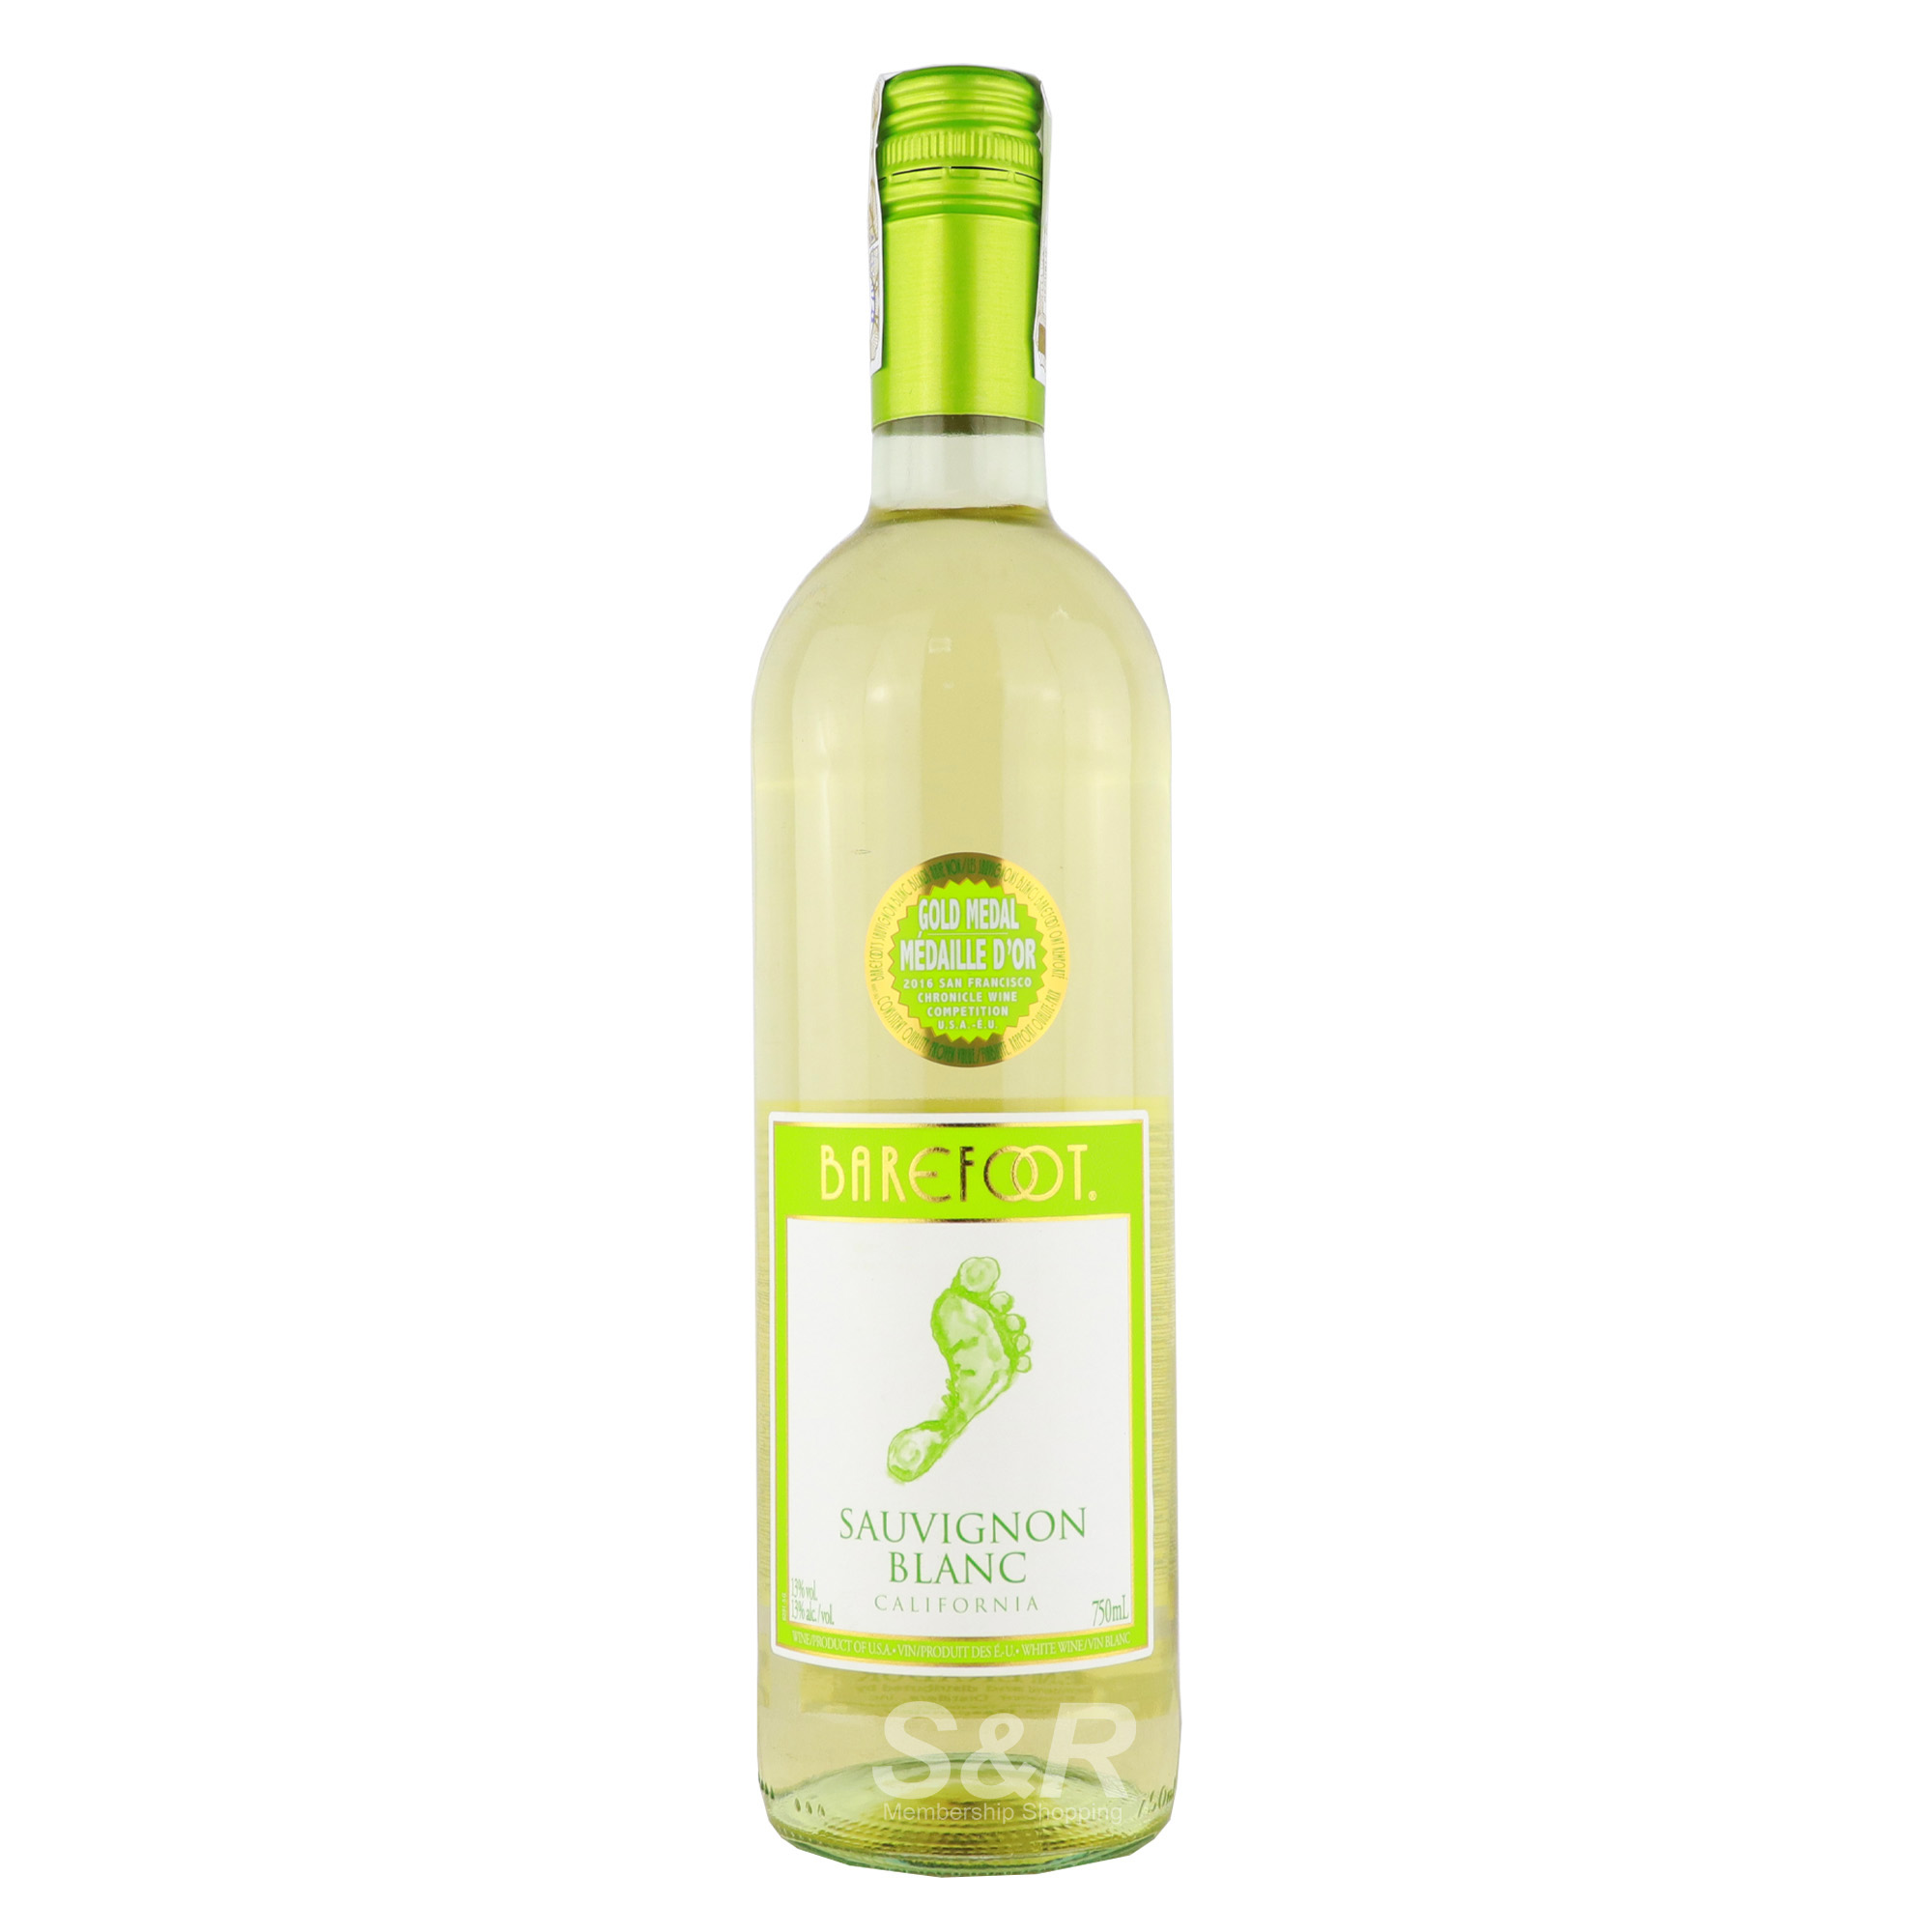 Barefoot Sauvignon Blanc White Wine 750mL